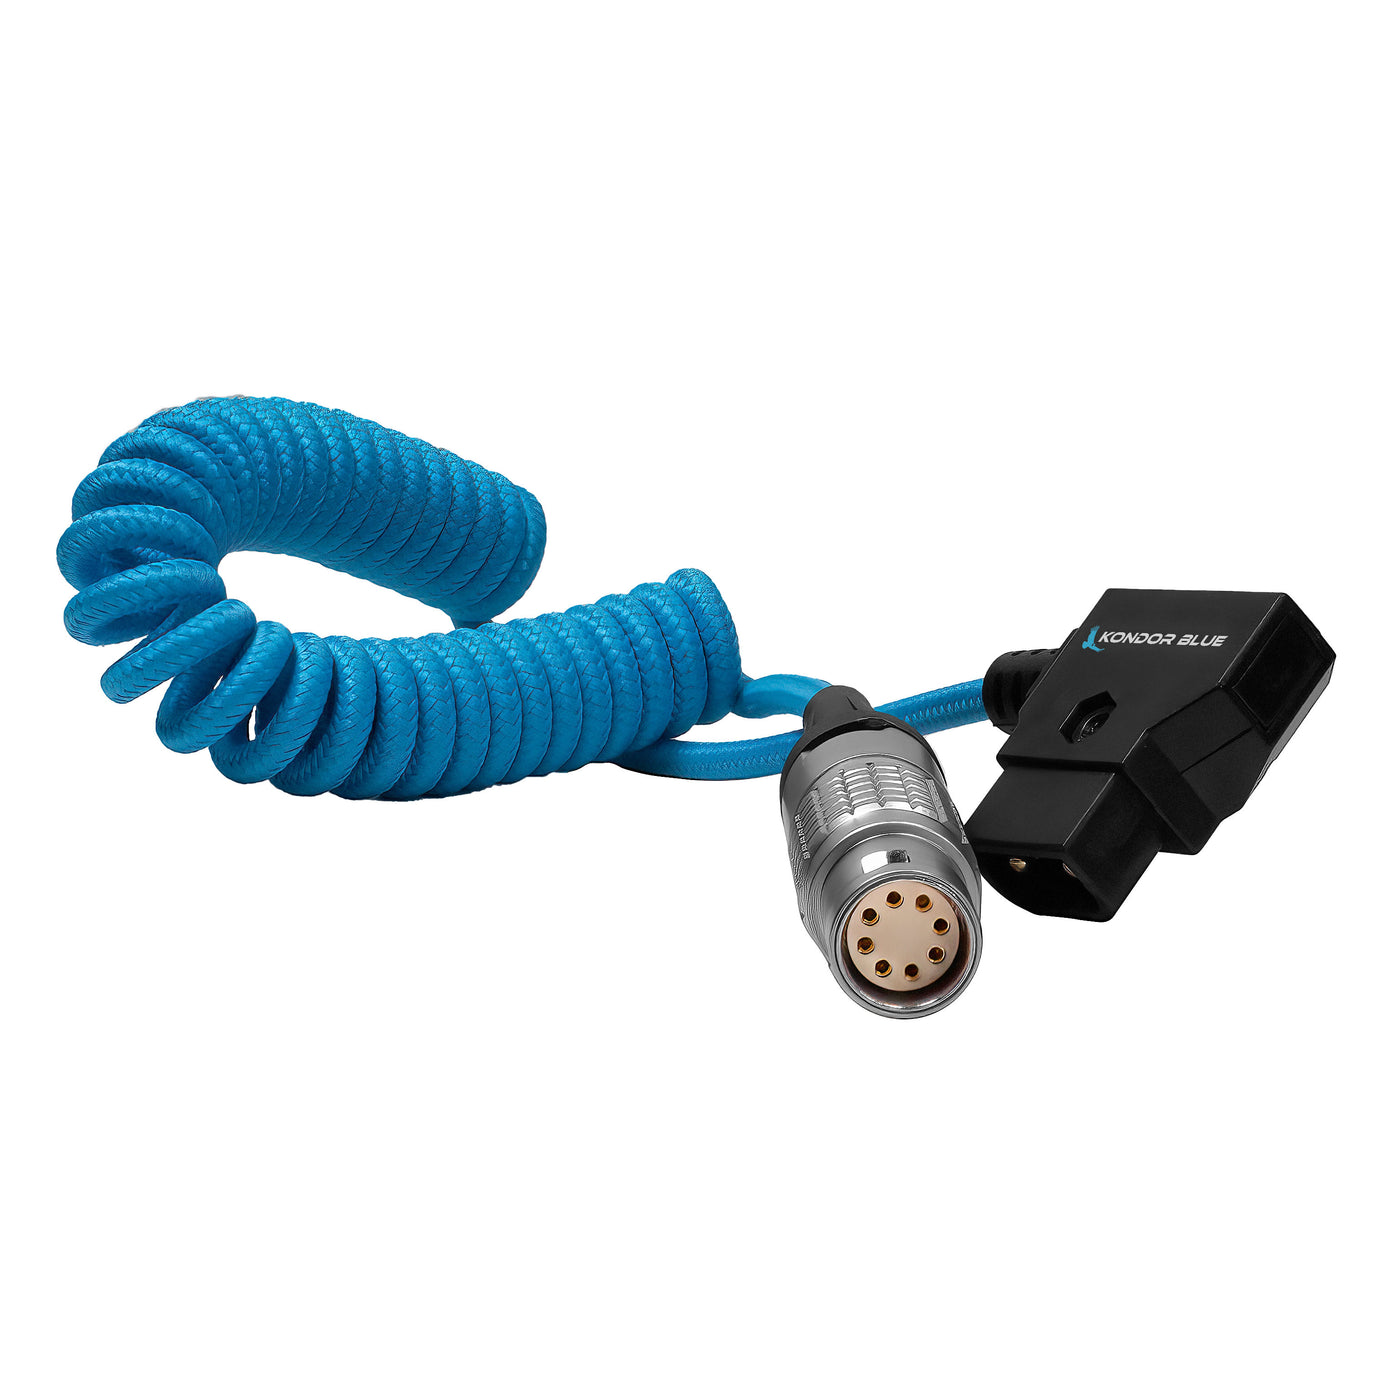 Arri Alexa Power Cable, Buy Arri Alexa Power Cable, Arri Alexa Power Cable  Online